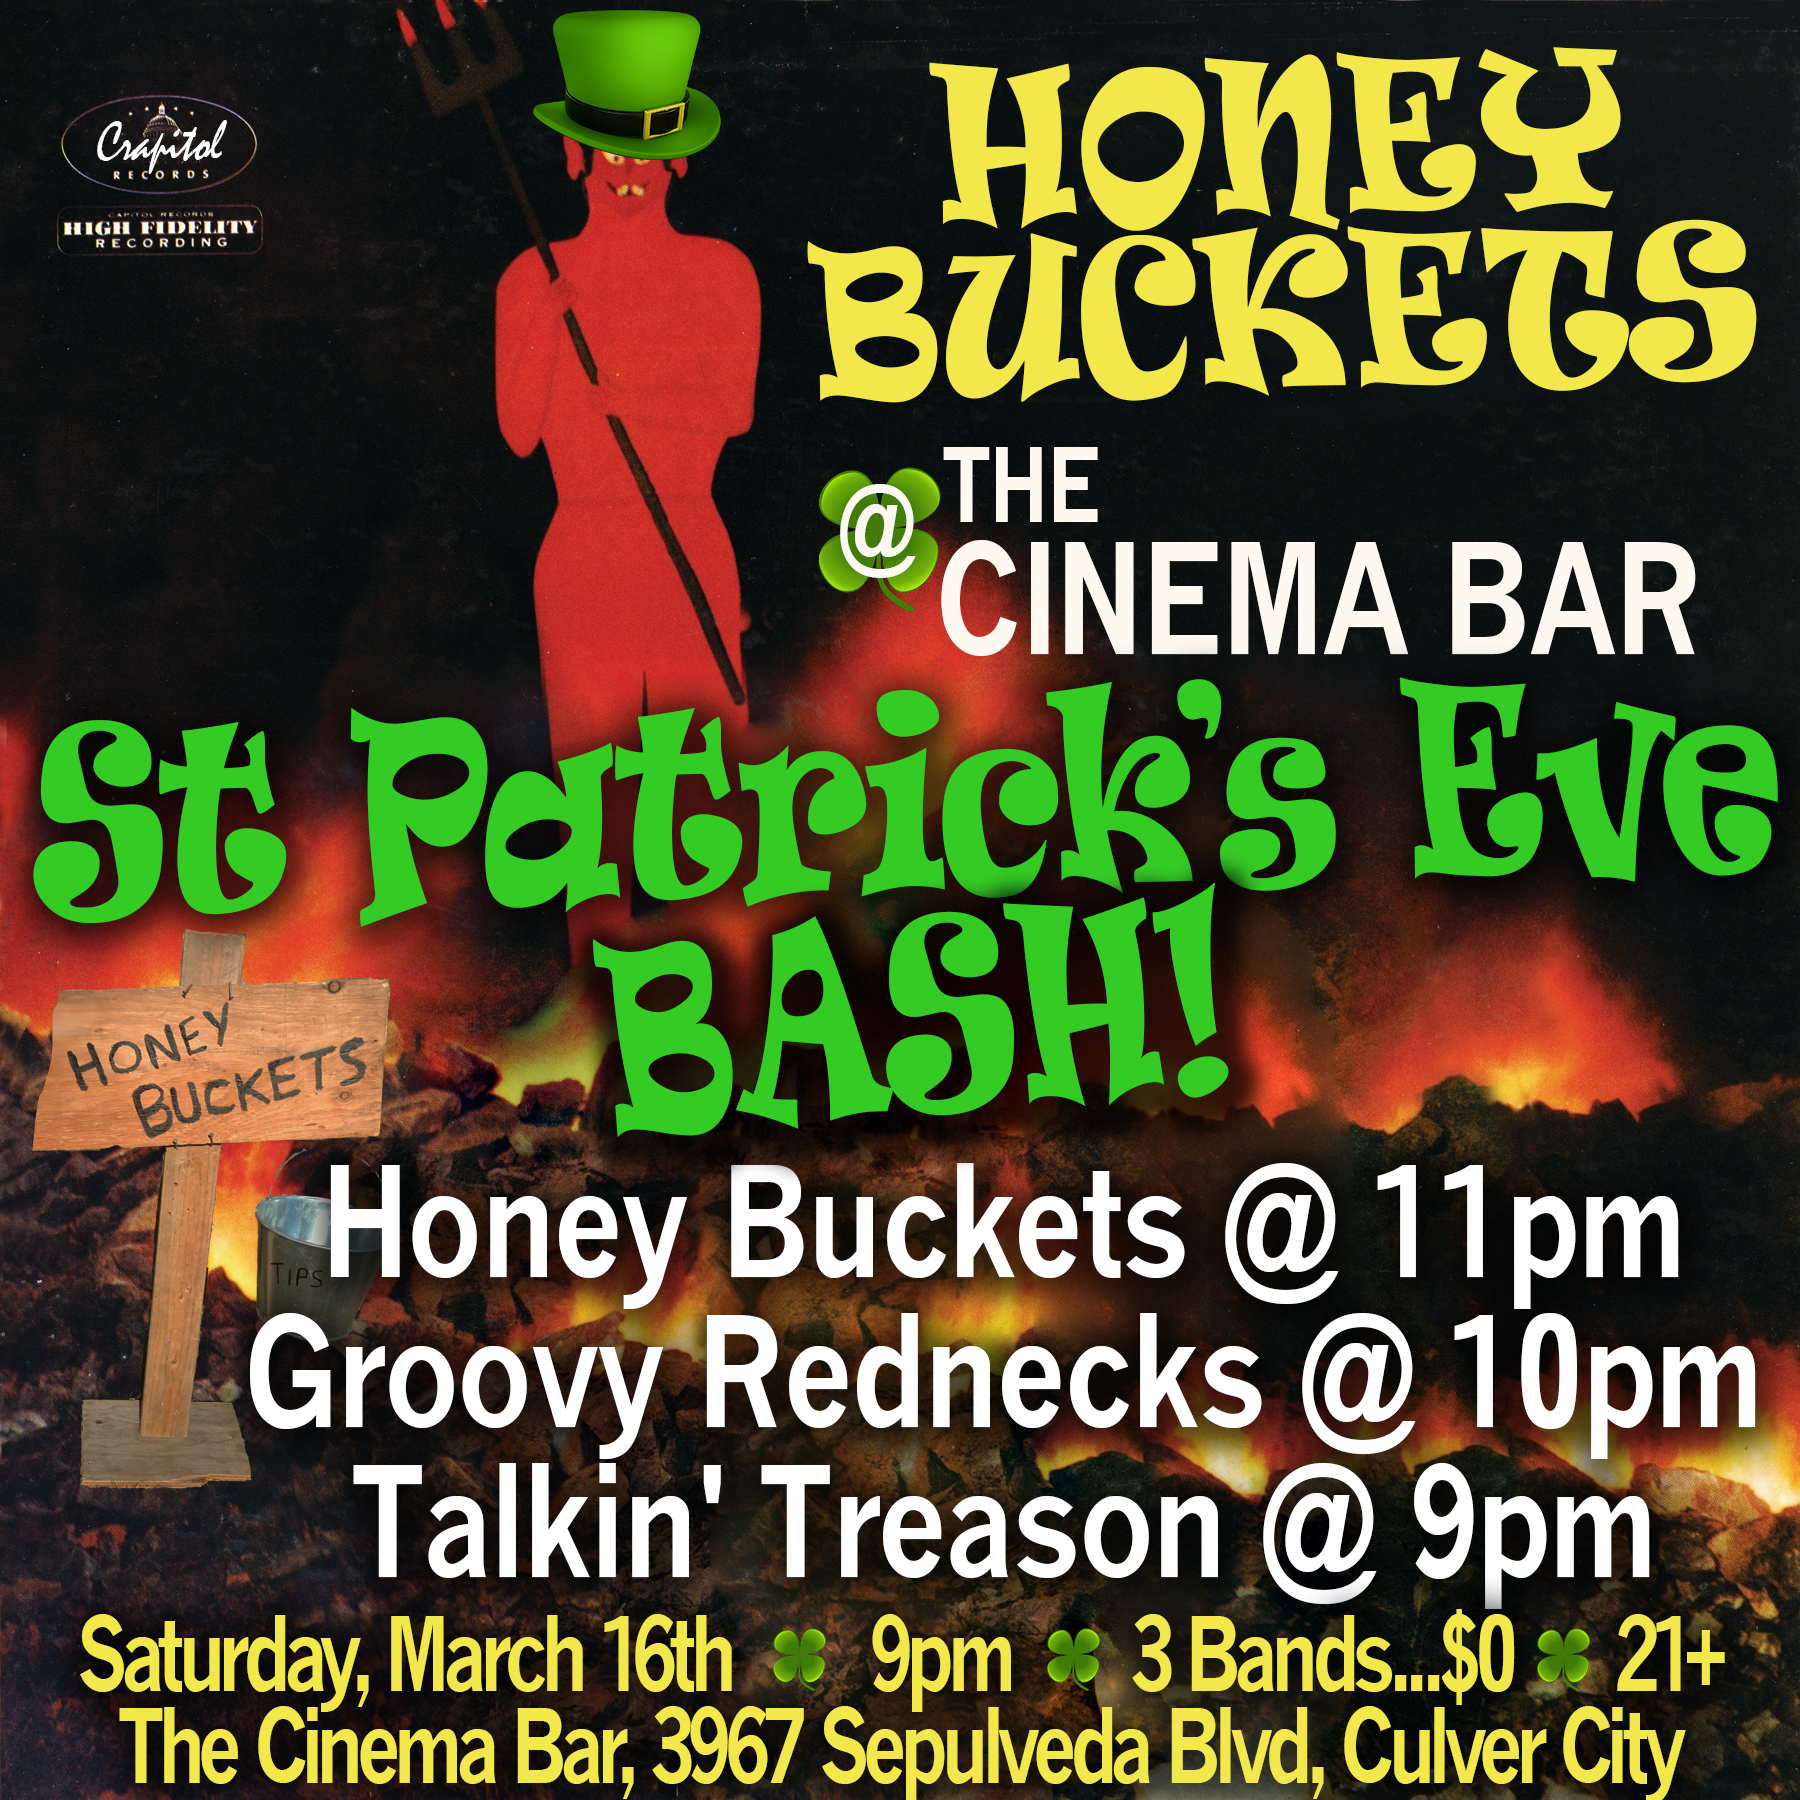 Honey Buckets & Groovy Rednecks at The Cinema Bar in Culver City Sat Mar 16th, FREE St Patrick's Eve Bash!